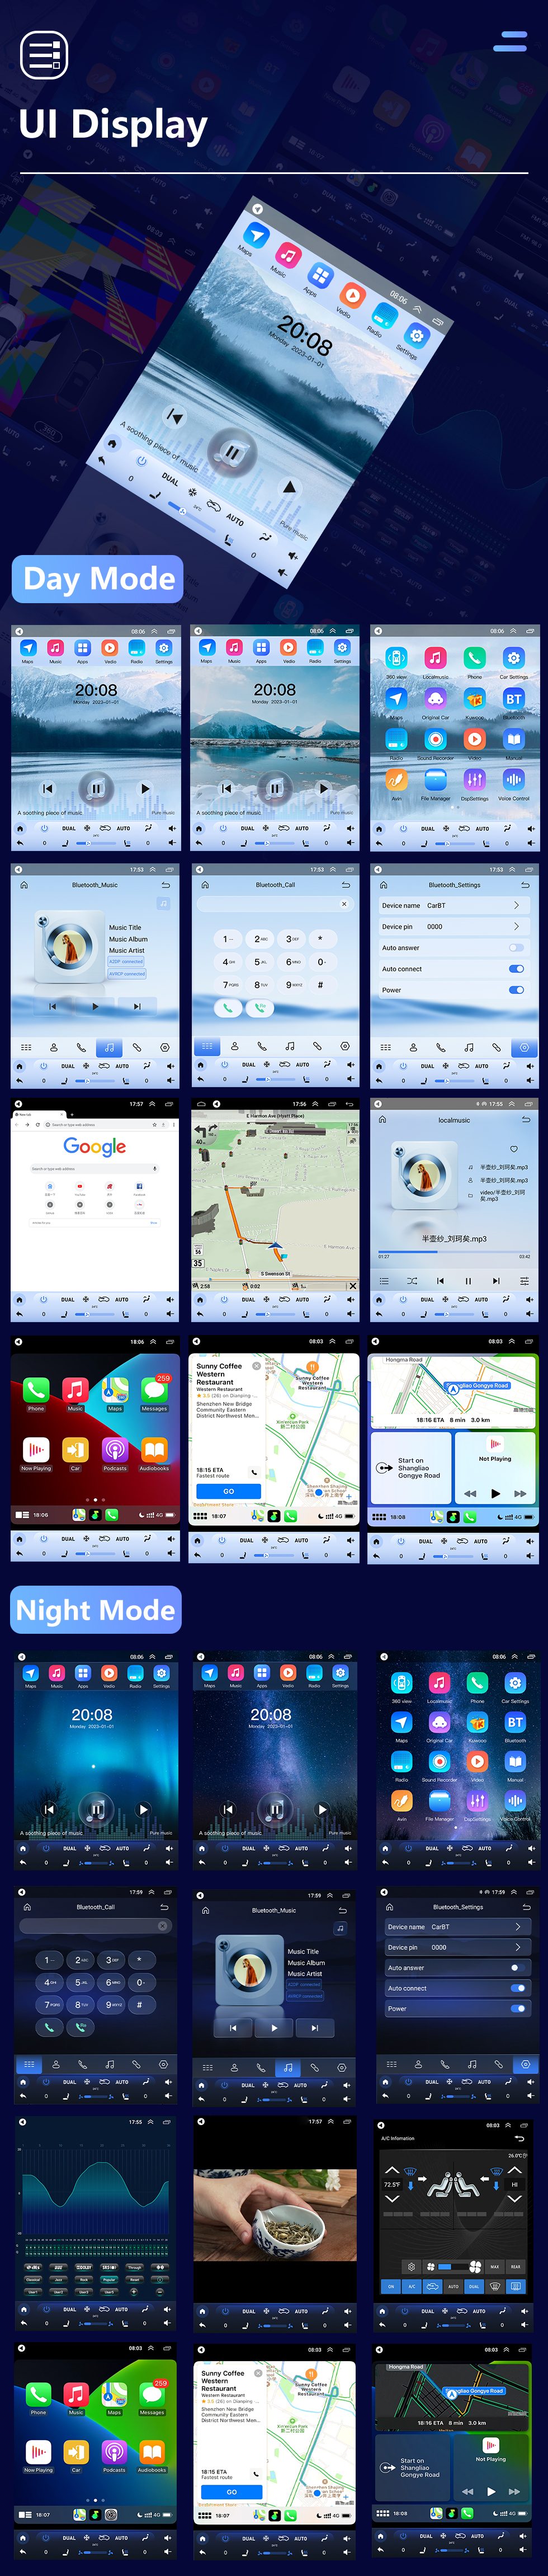 Seicane Android 10.0 2012 2013 2014 2015 Ford Focus 9,7 Zoll Tesla Style HD Touchscreen Autoradio Radio Haupteinheit GPS Navigation Bluetooth Unterstützung Lenkradsteuerung USB WIFI OBD2 Rückfahrkamera